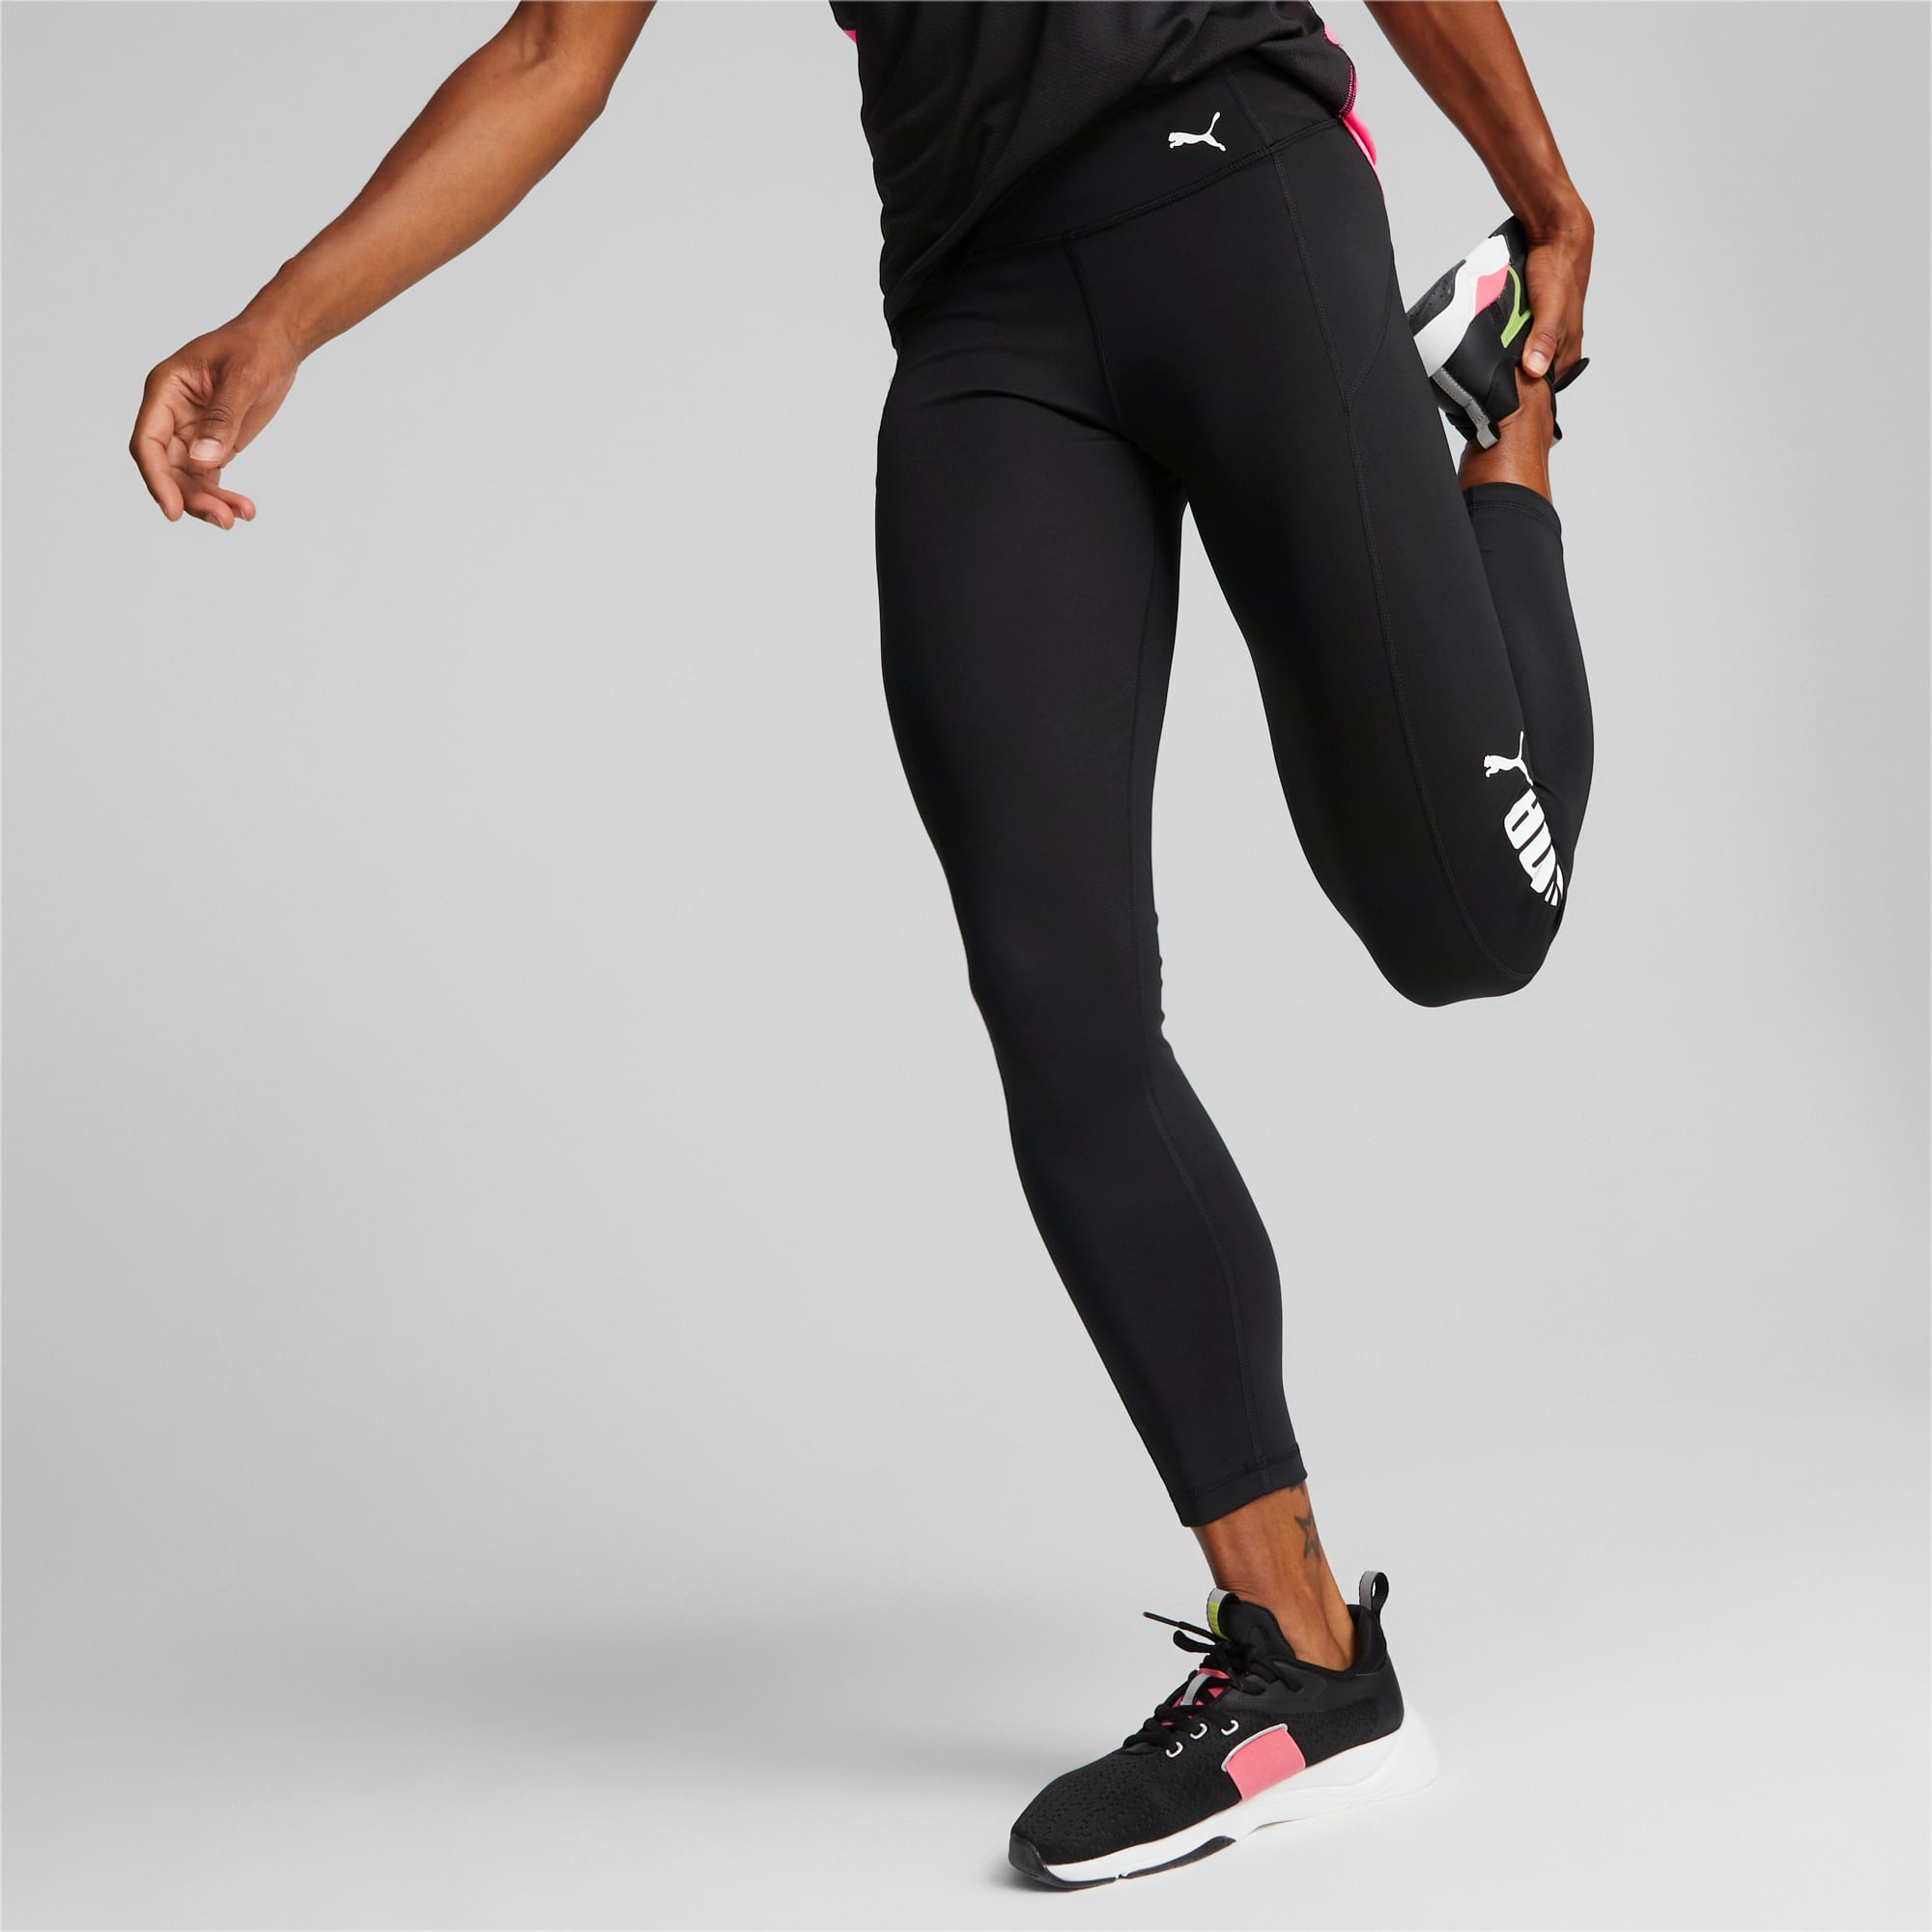 All Leggings | Tights and Puma Training Tights Black Women\'s PUMA Train | PUMA Day | 7/8